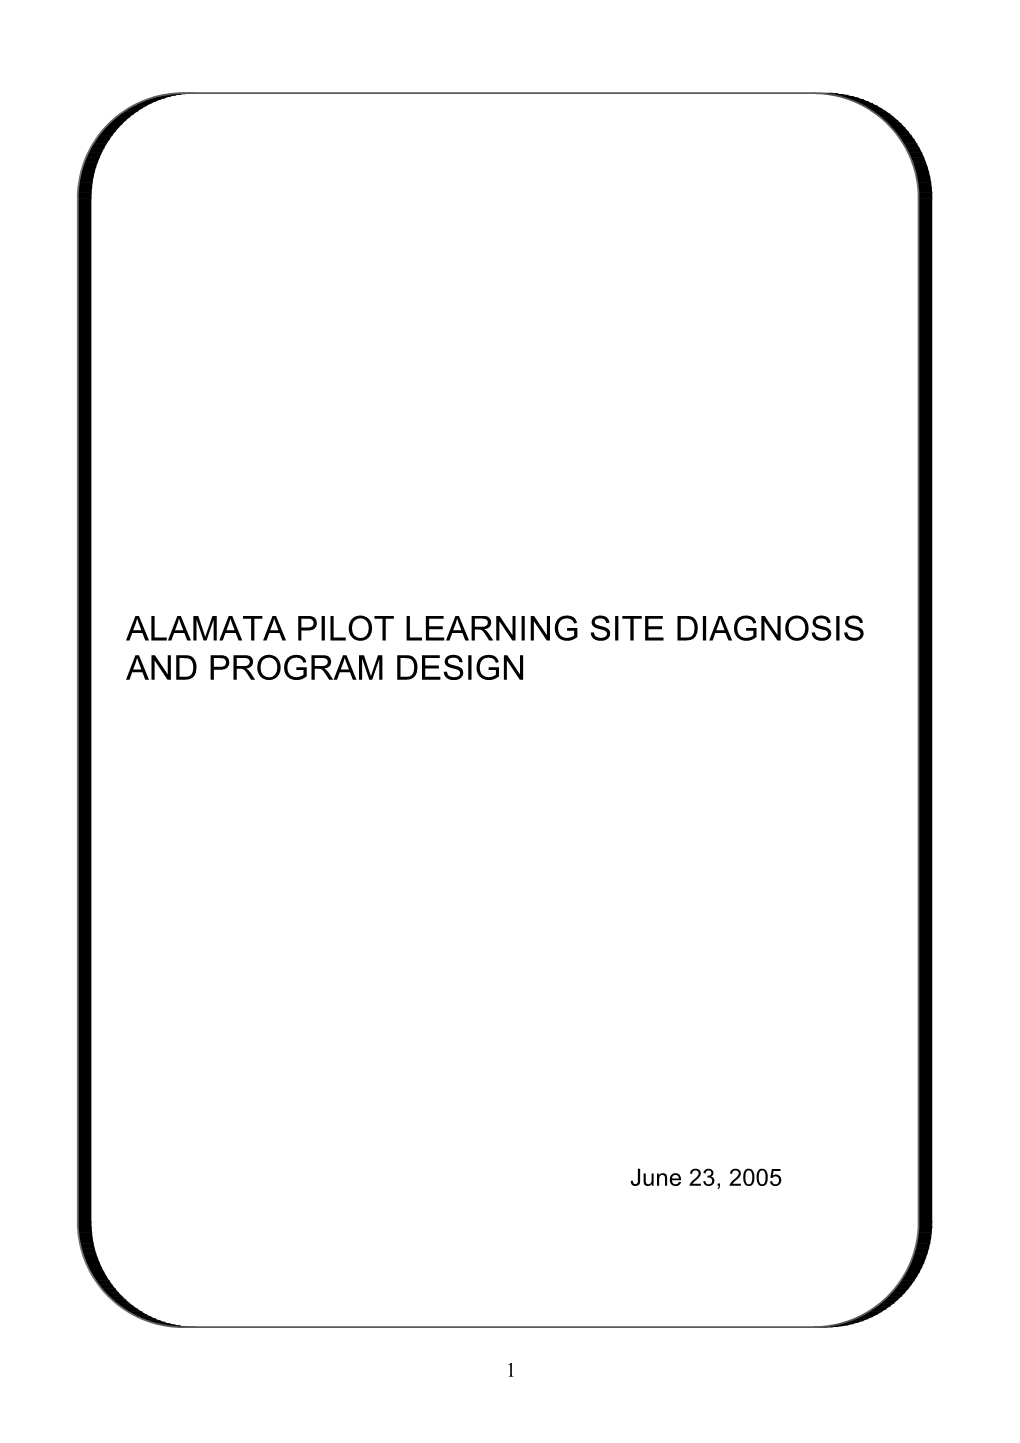 Alamata Pilot Learning Site Diagnosis and Program Design